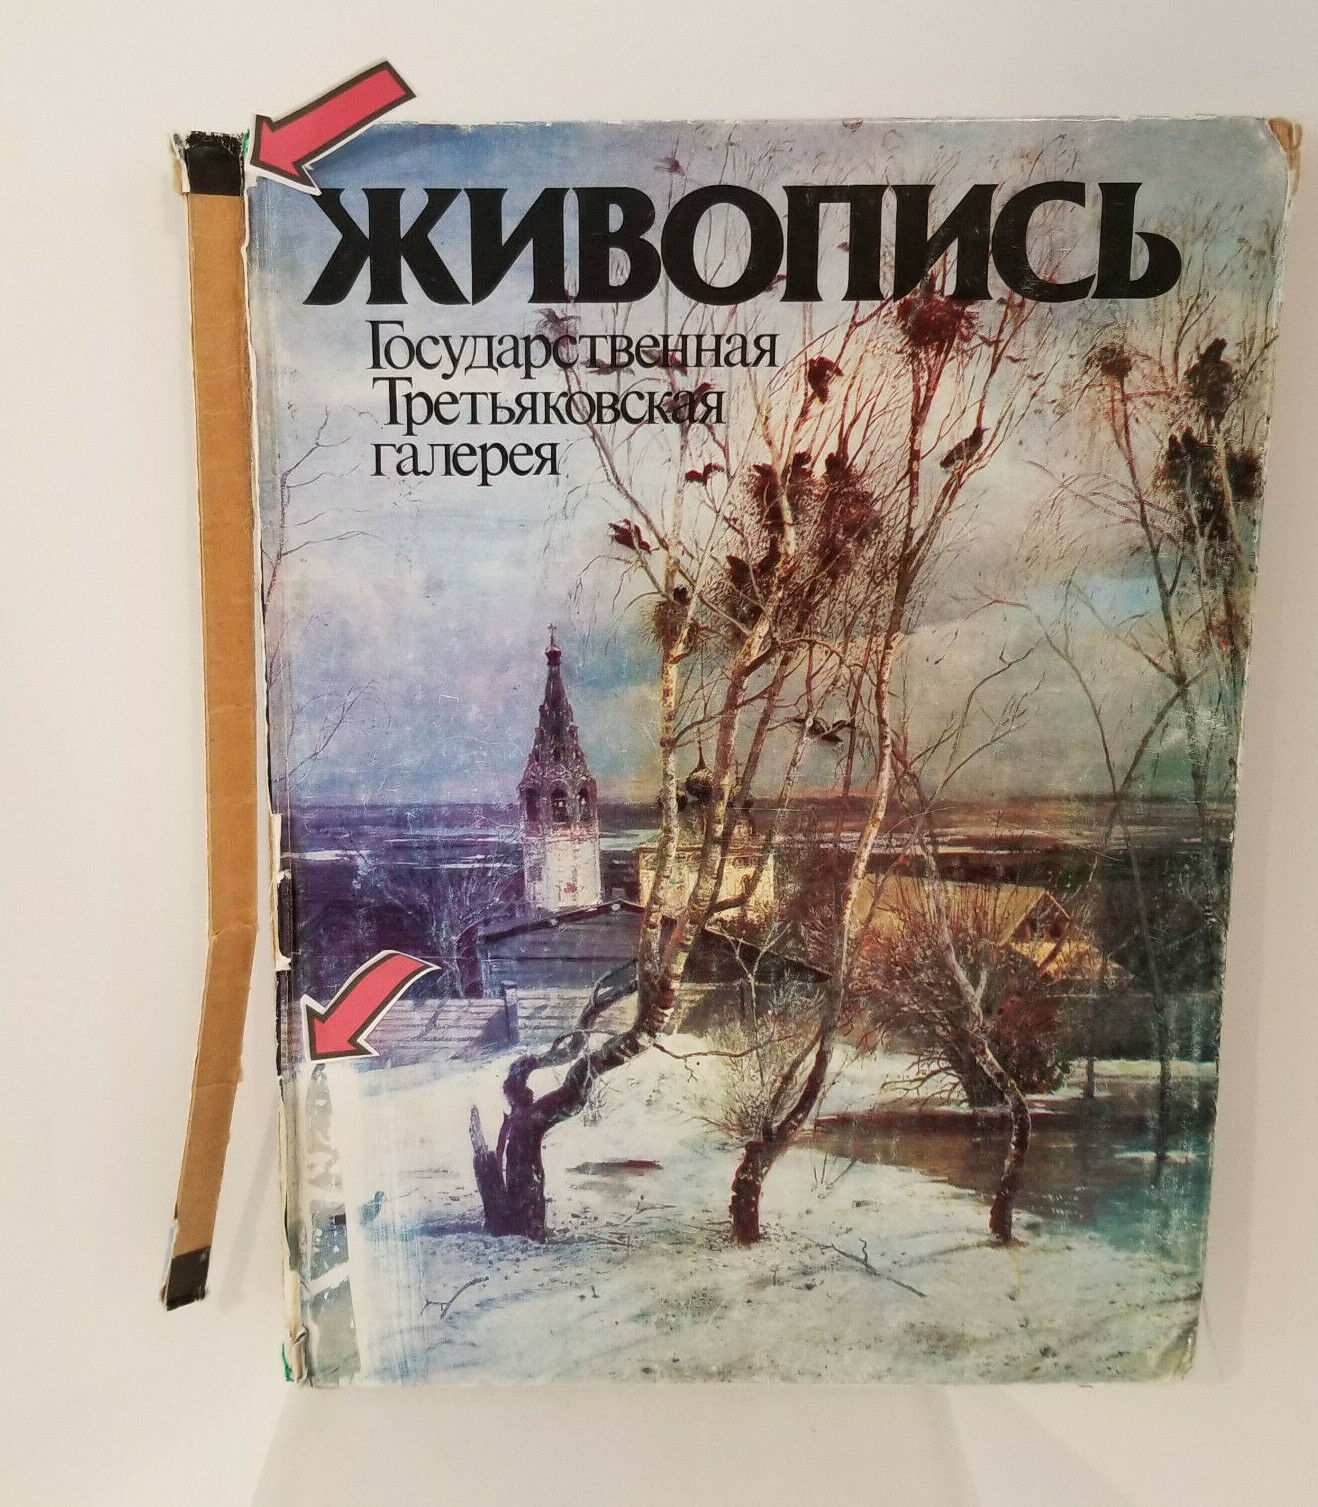 Art Book Moscow Tretyako Gallery 1981 Tретьяковская галерея  Color Photos